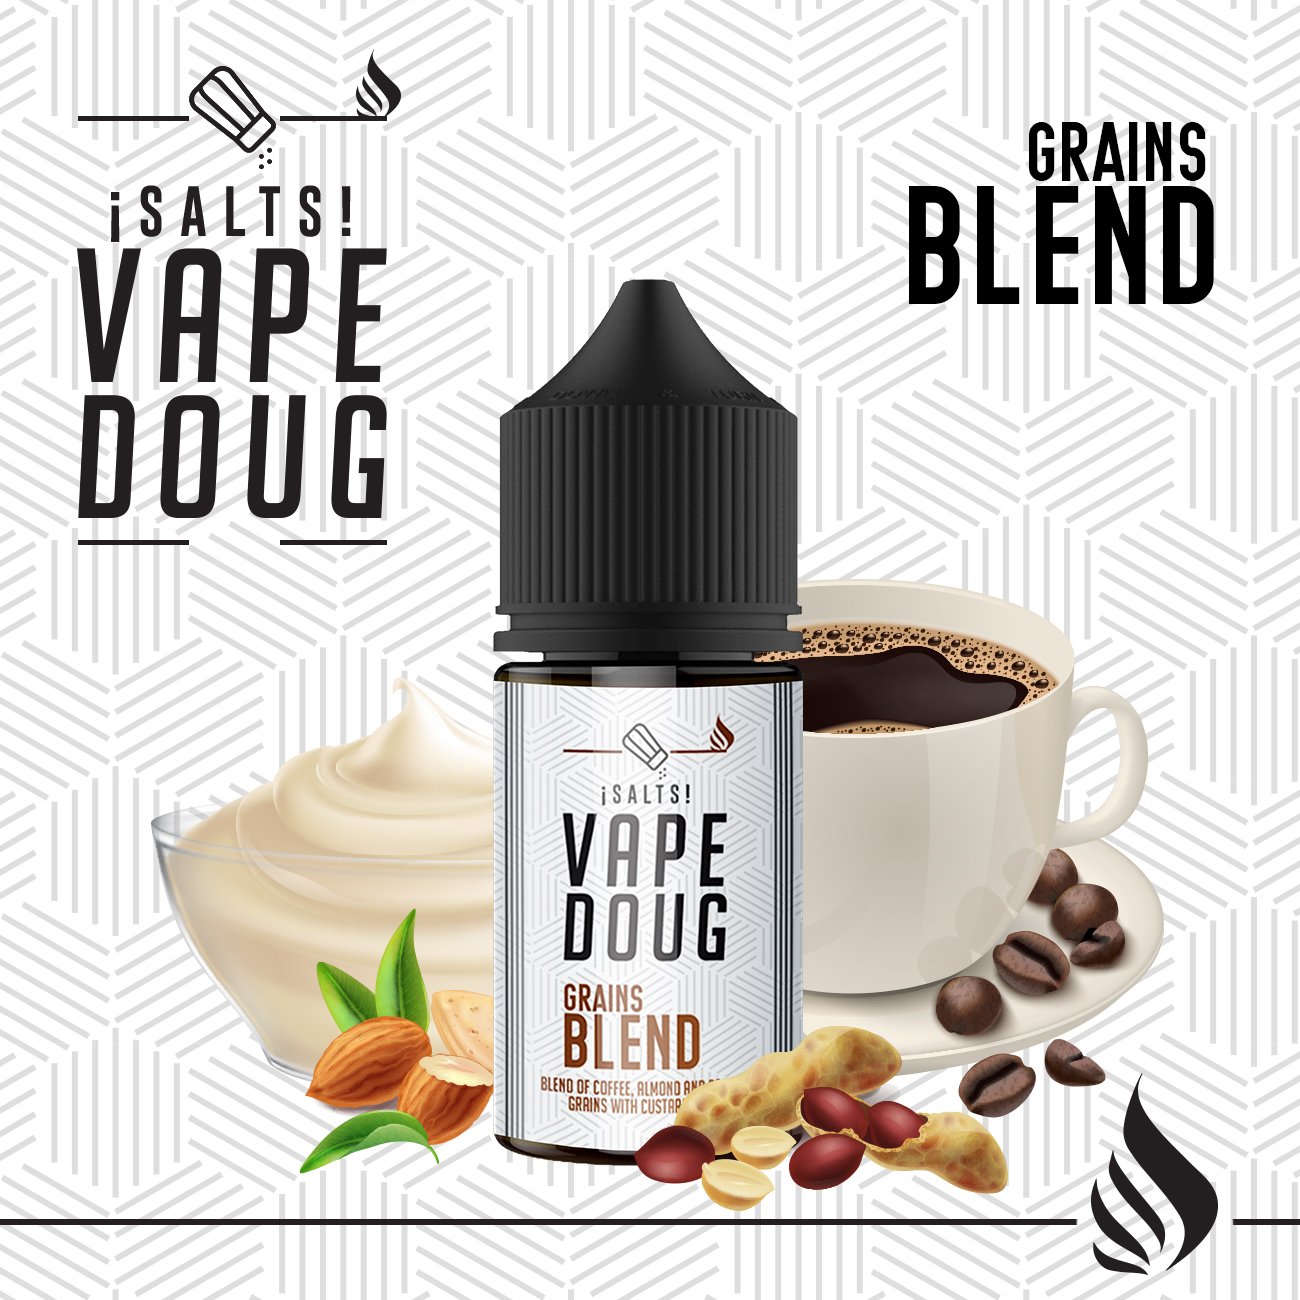 Doug Grains Blend 30ml con Sales de nicotina 20/30/40 mg/ml